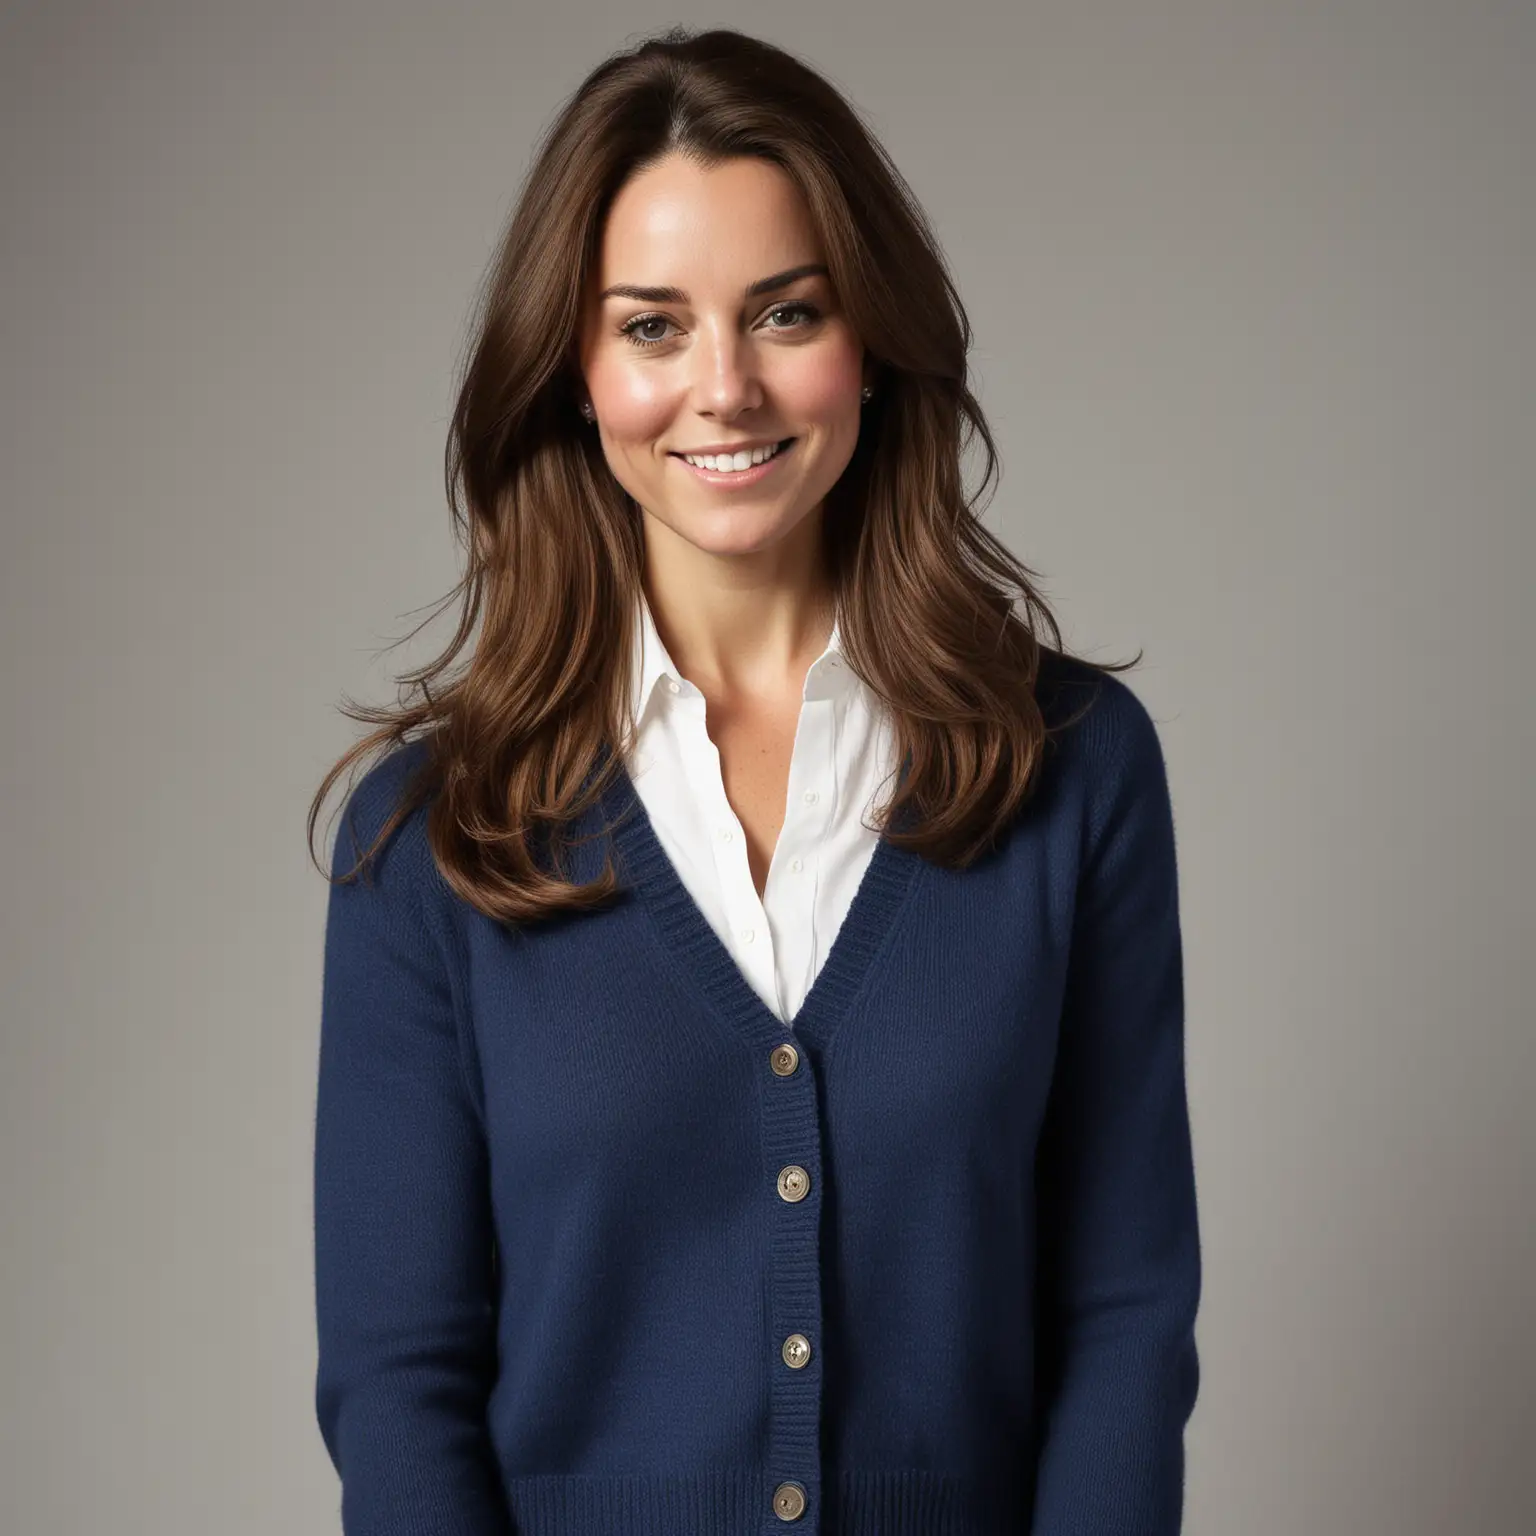 Kate Middleton Chest Shot Tender Gaze and Refreshing Smile in Royal Blue Wool Cardigan